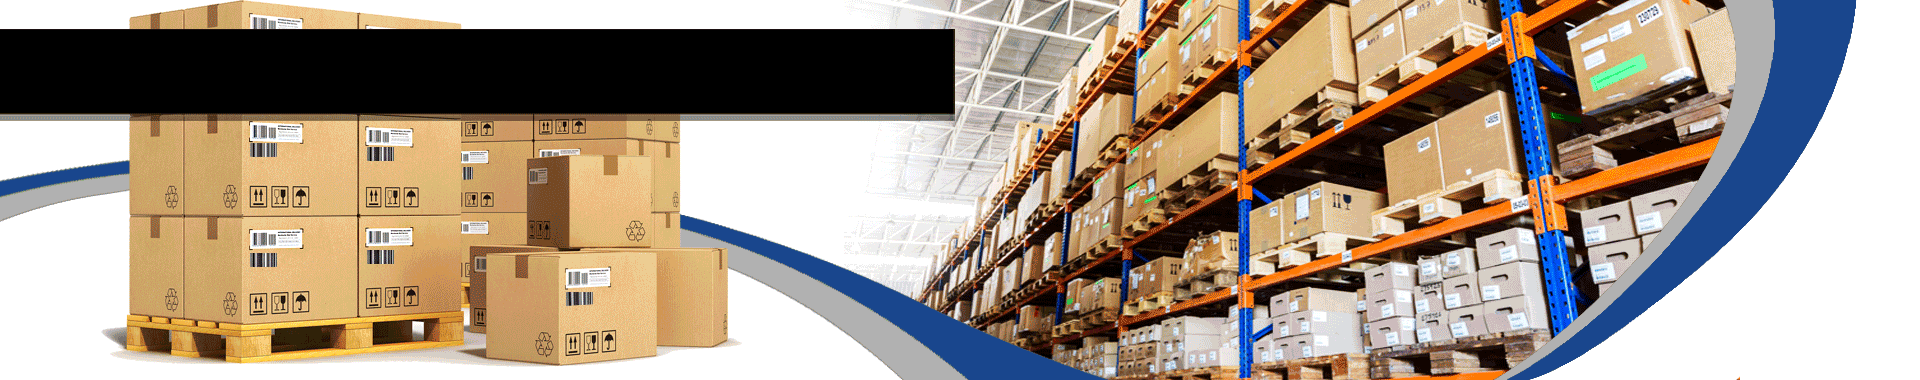 Warehousing & Logistics 